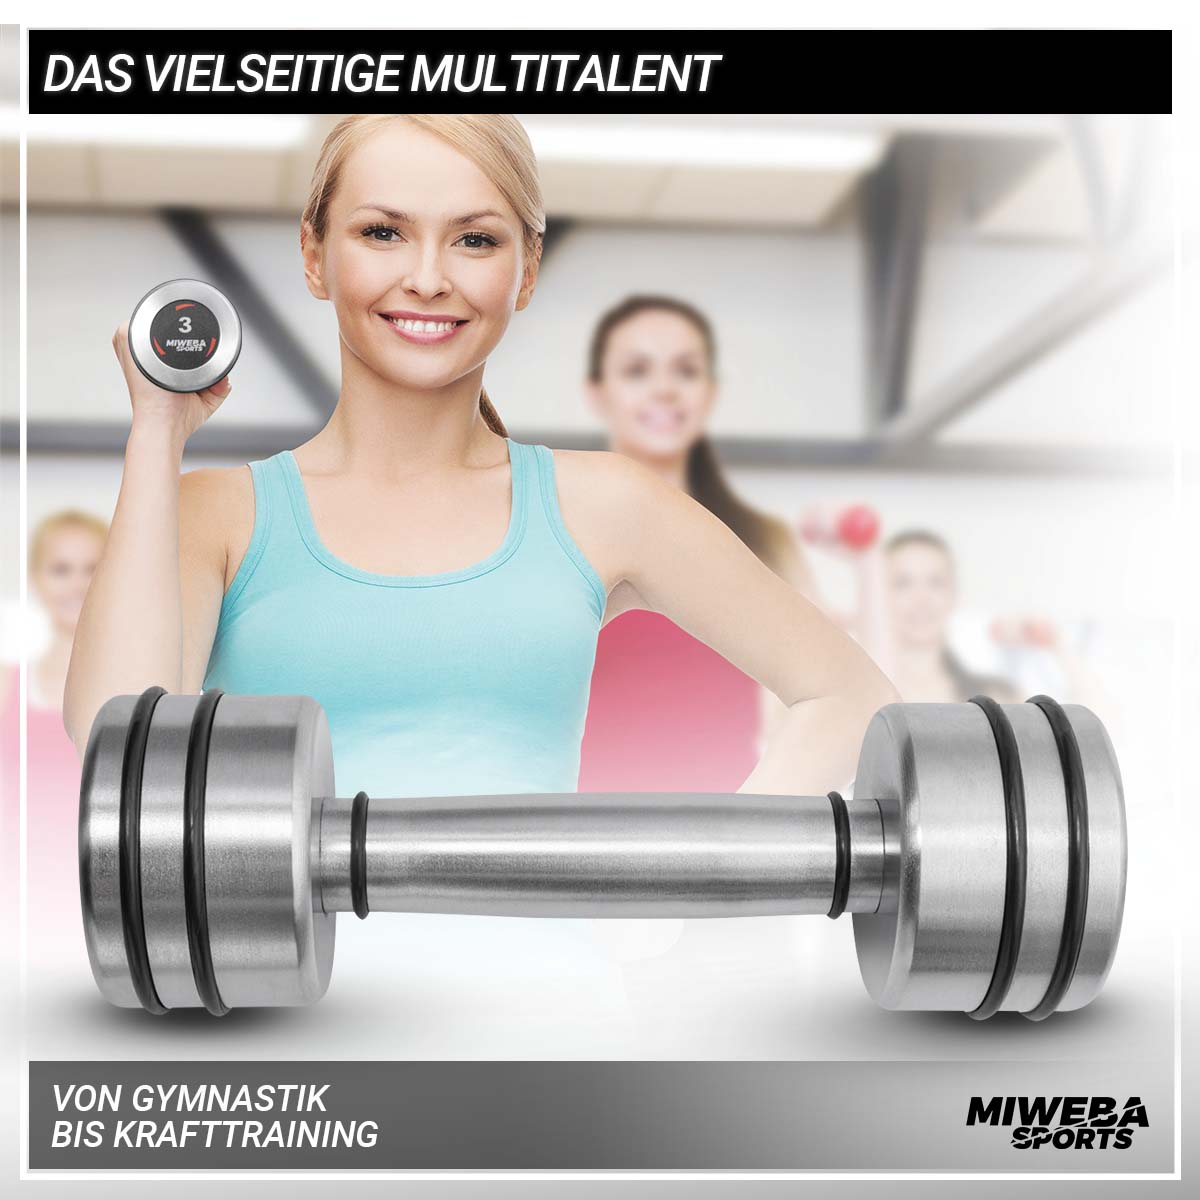 Kurzhanteln, MIWEBA Chrom Matt 2x kg Hanteln SPORTS silber Fitnesszubehör 3.0